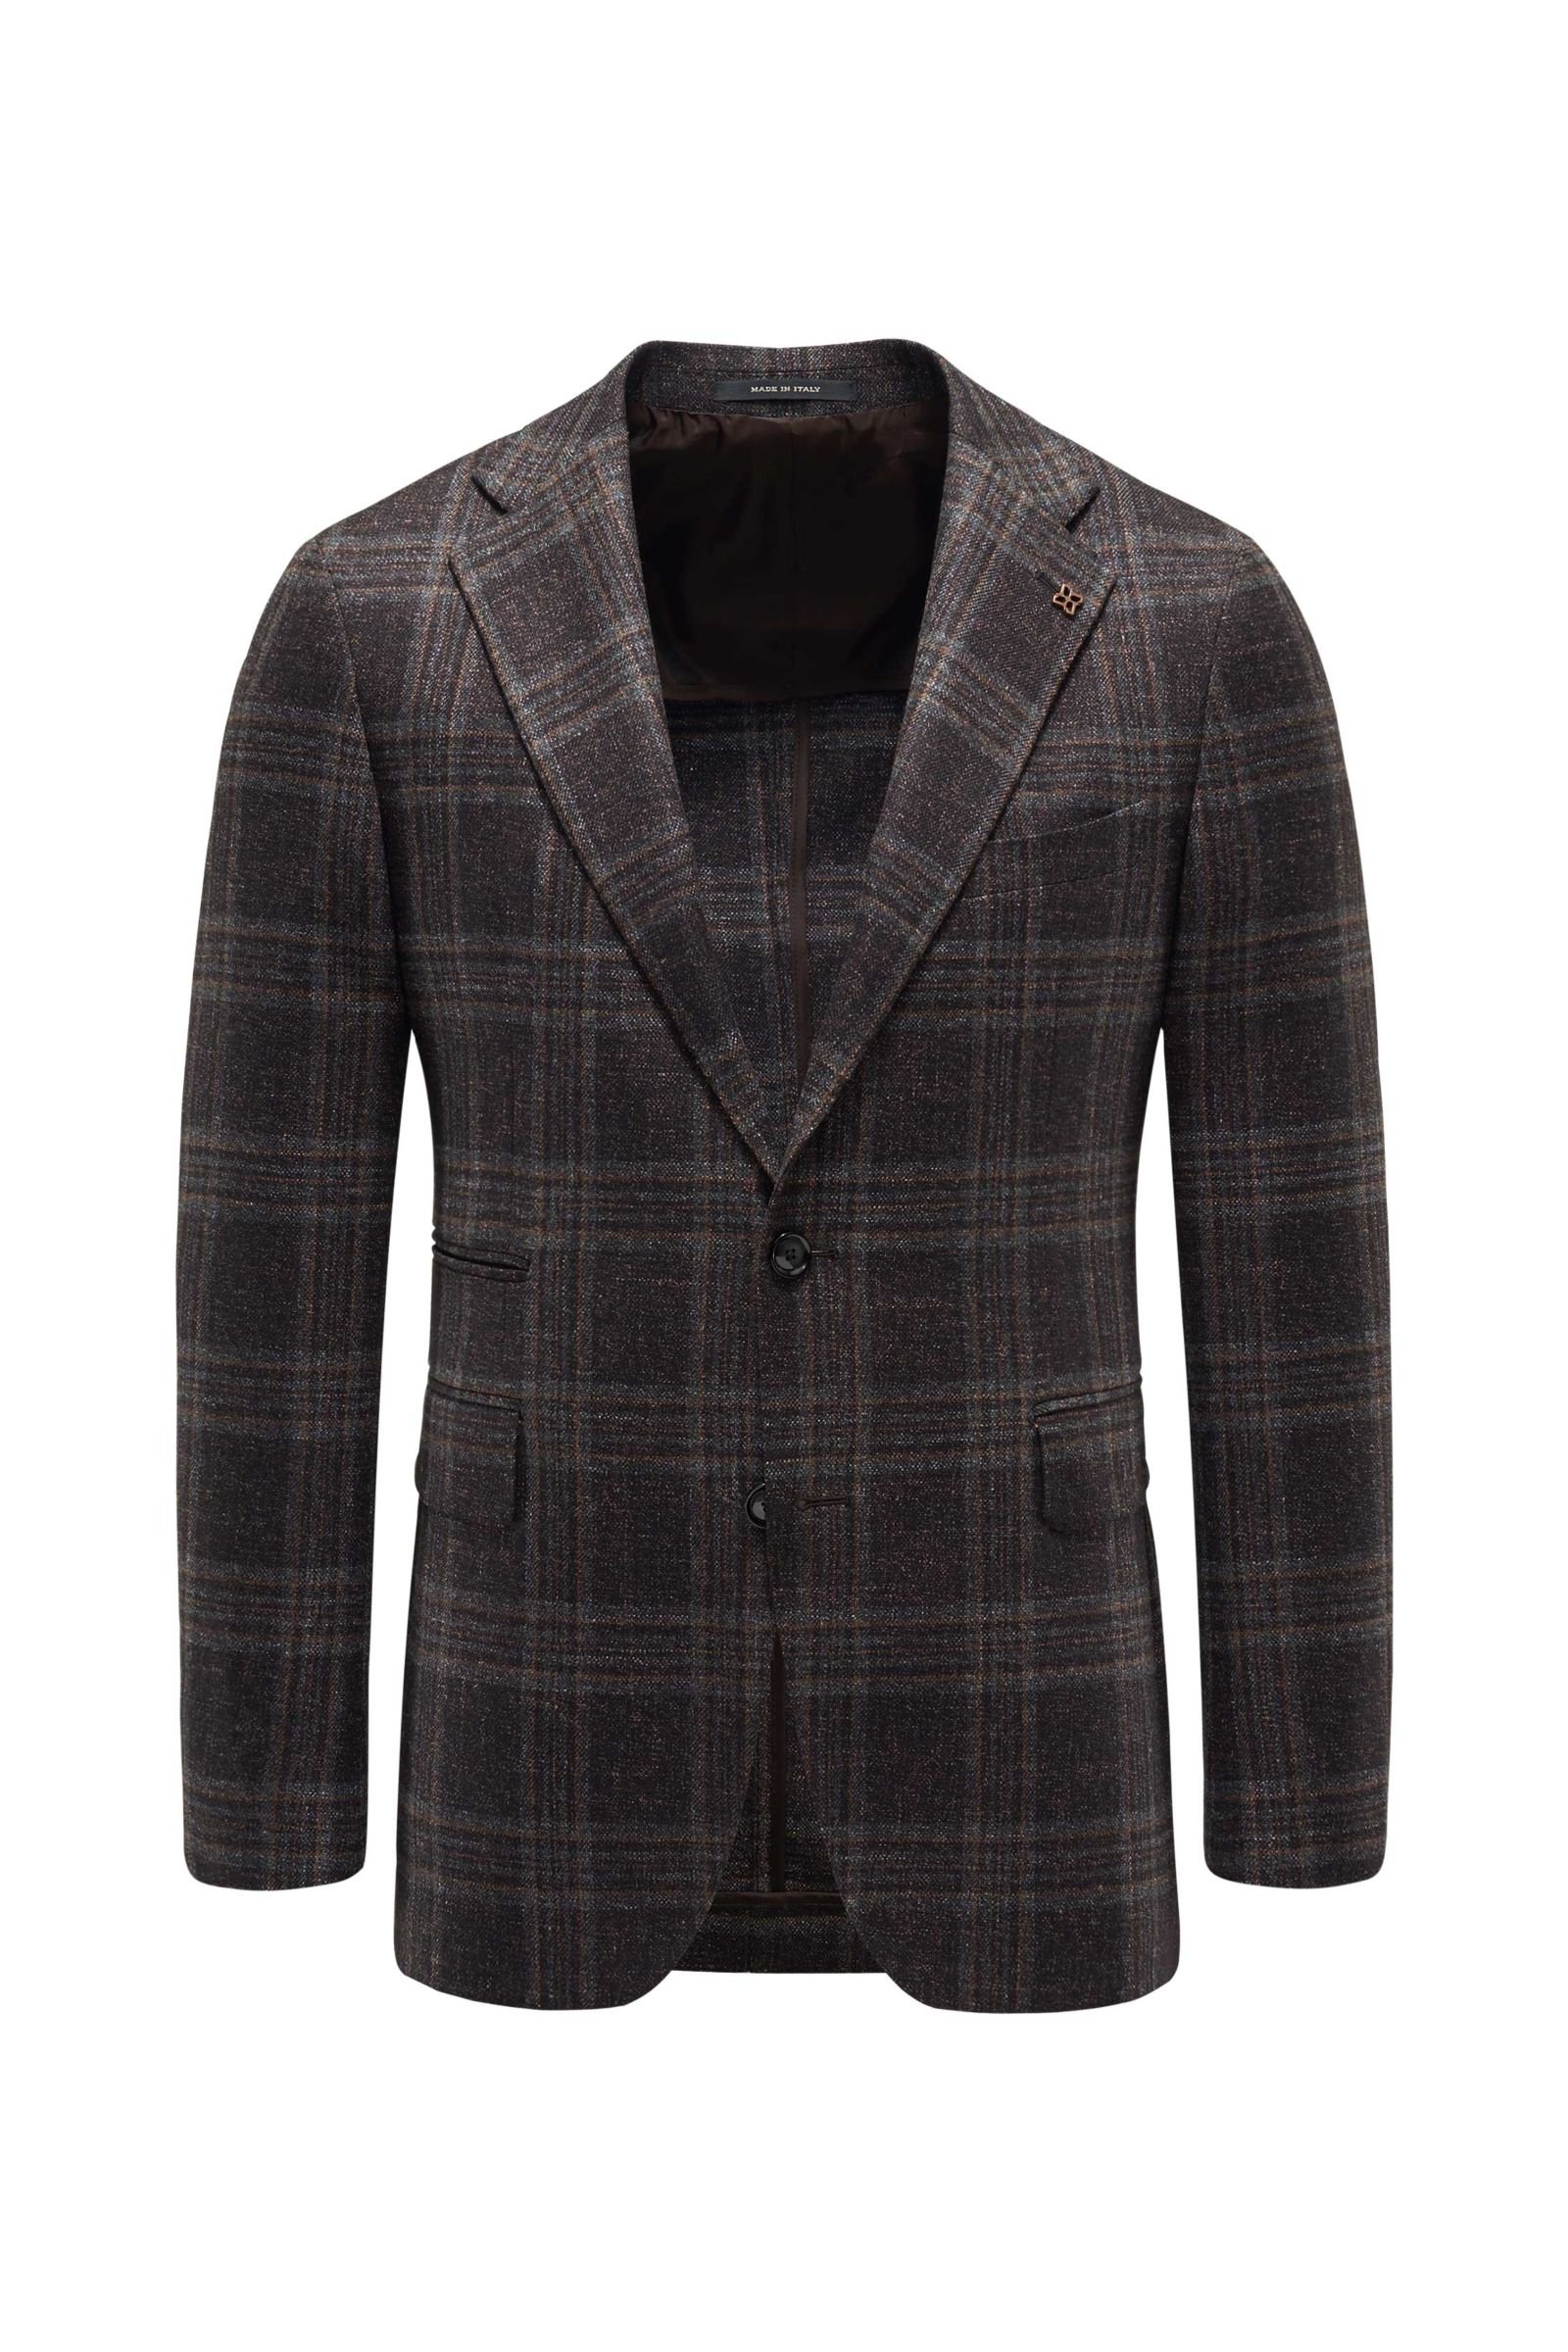 TAGLIATORE smart-casual jacket dark brown checked | BRAUN Hamburg